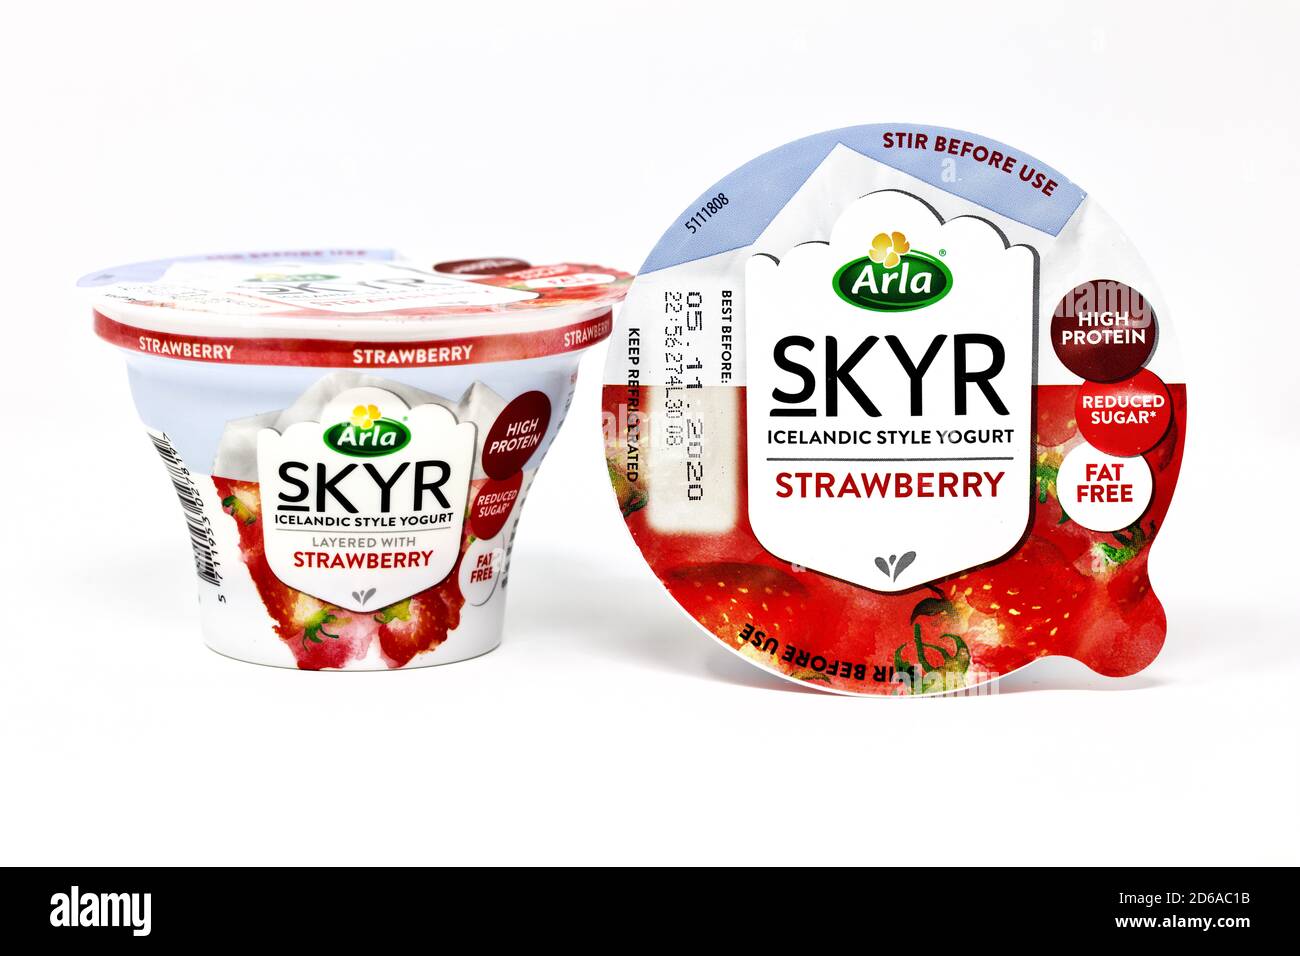 Arla Skyr Strawberry - Yogurt Alamy Stock Photo